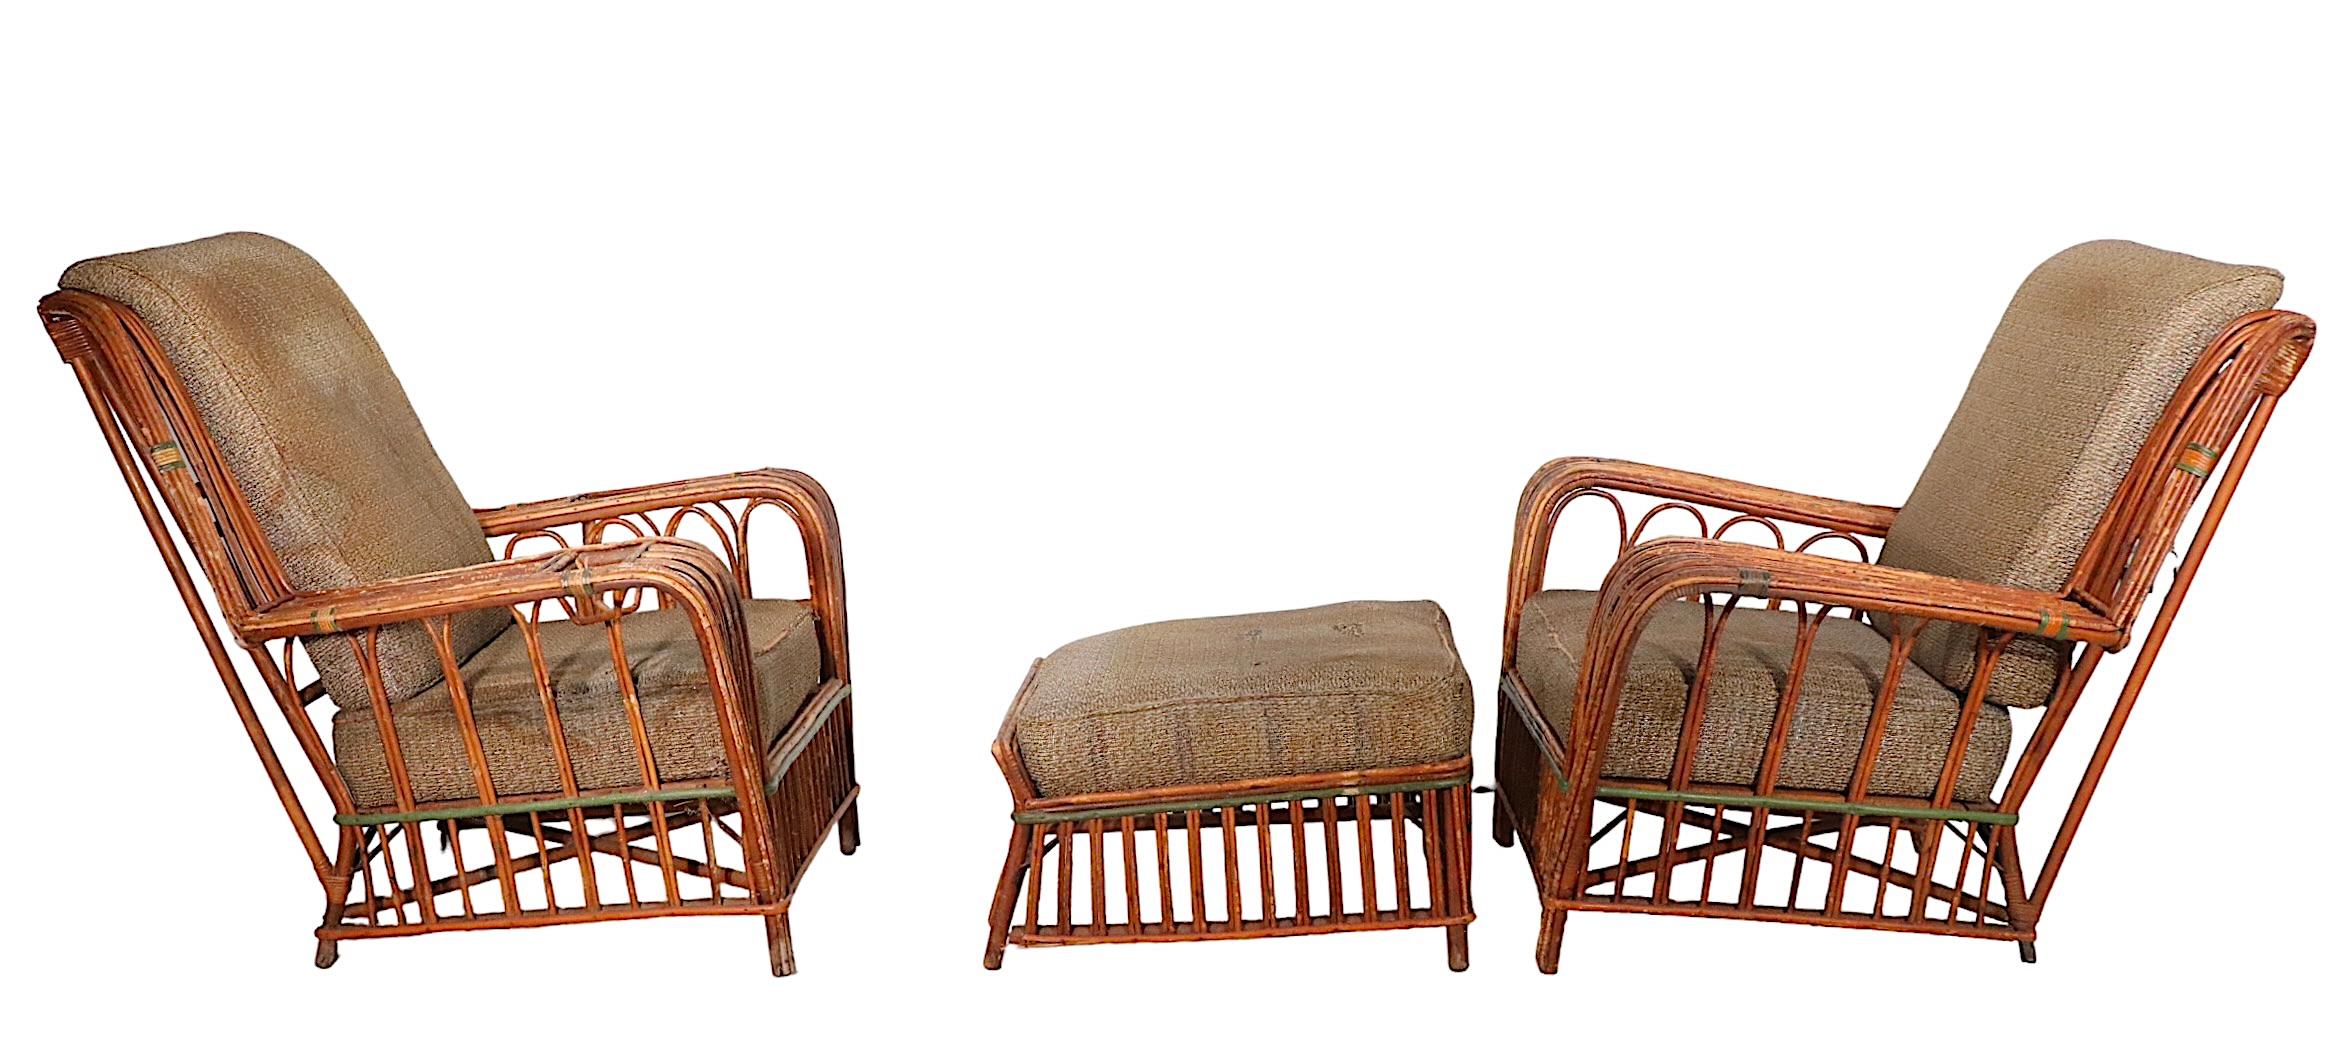 3 Pc Set Art Deco Split Reed Chairs and Ottoman, circa 1920-1930s 11